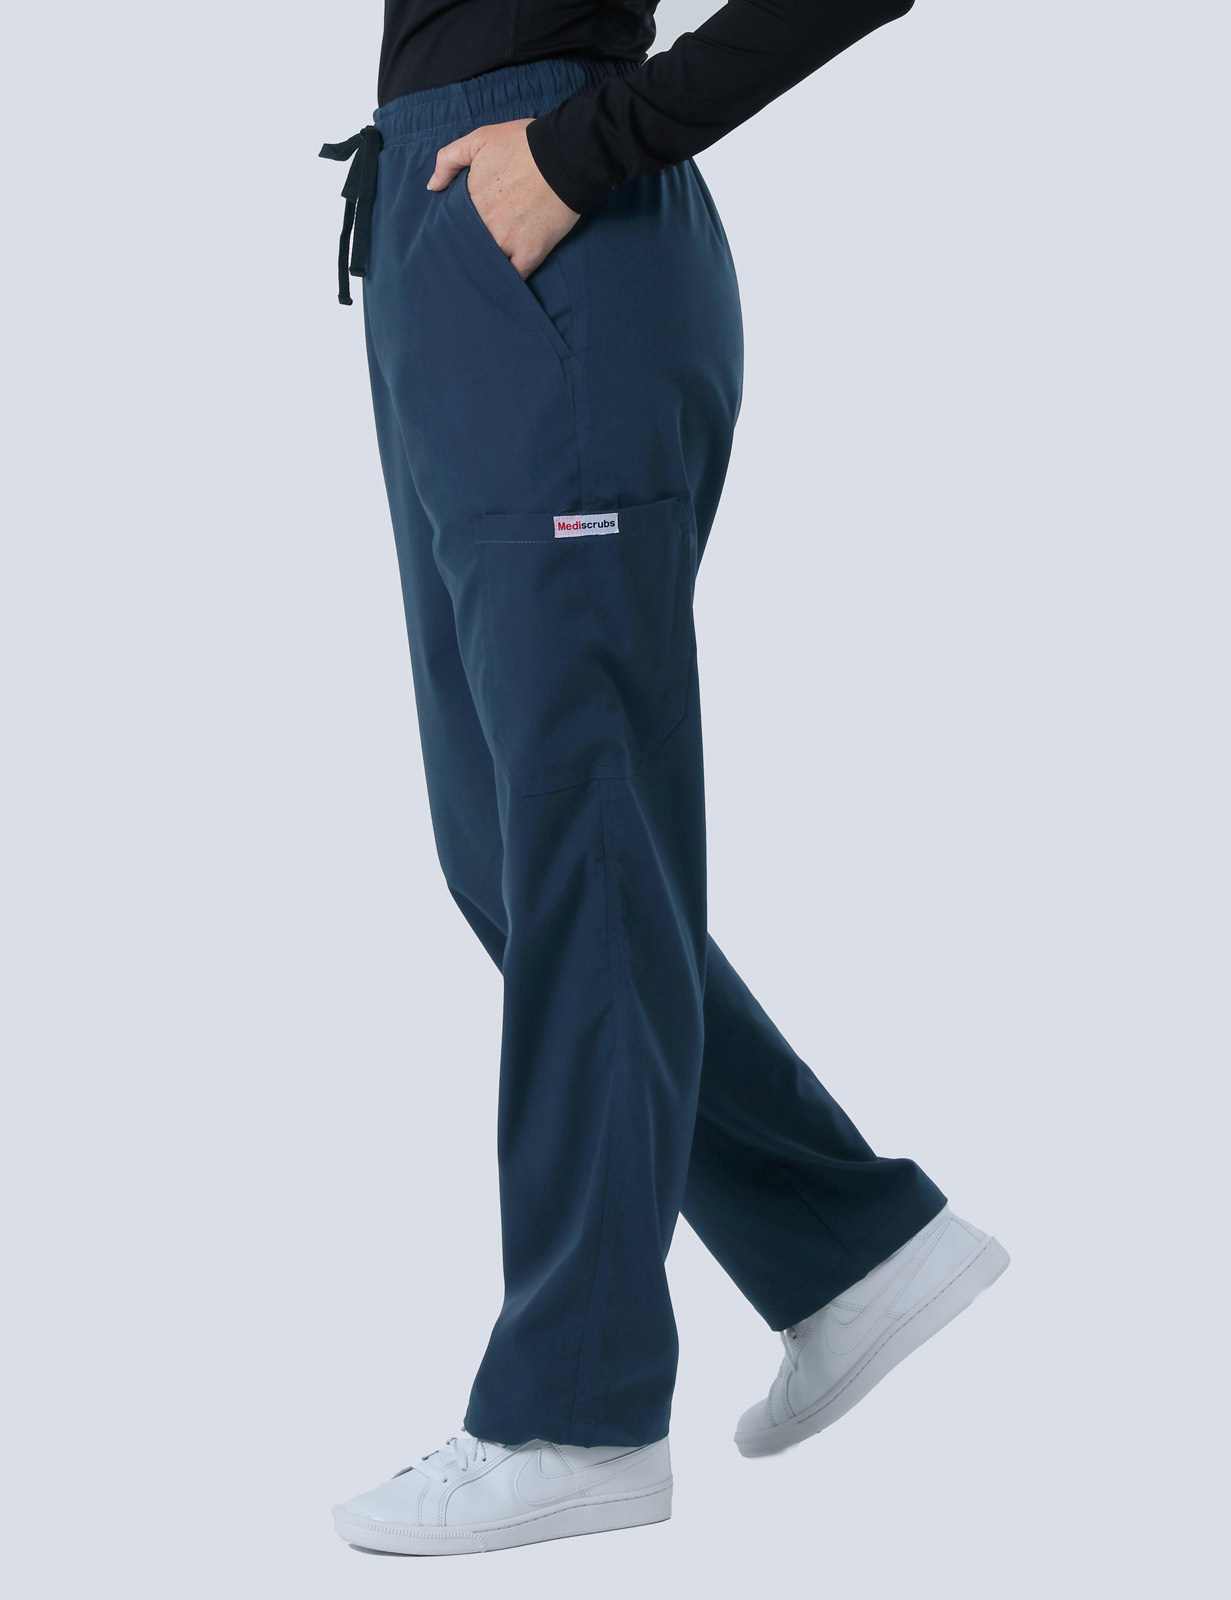 Peninsula Health - ED Emergency Nurse (4 Pocket Scrub Top and Cargo Pants in Navy incl Logos)